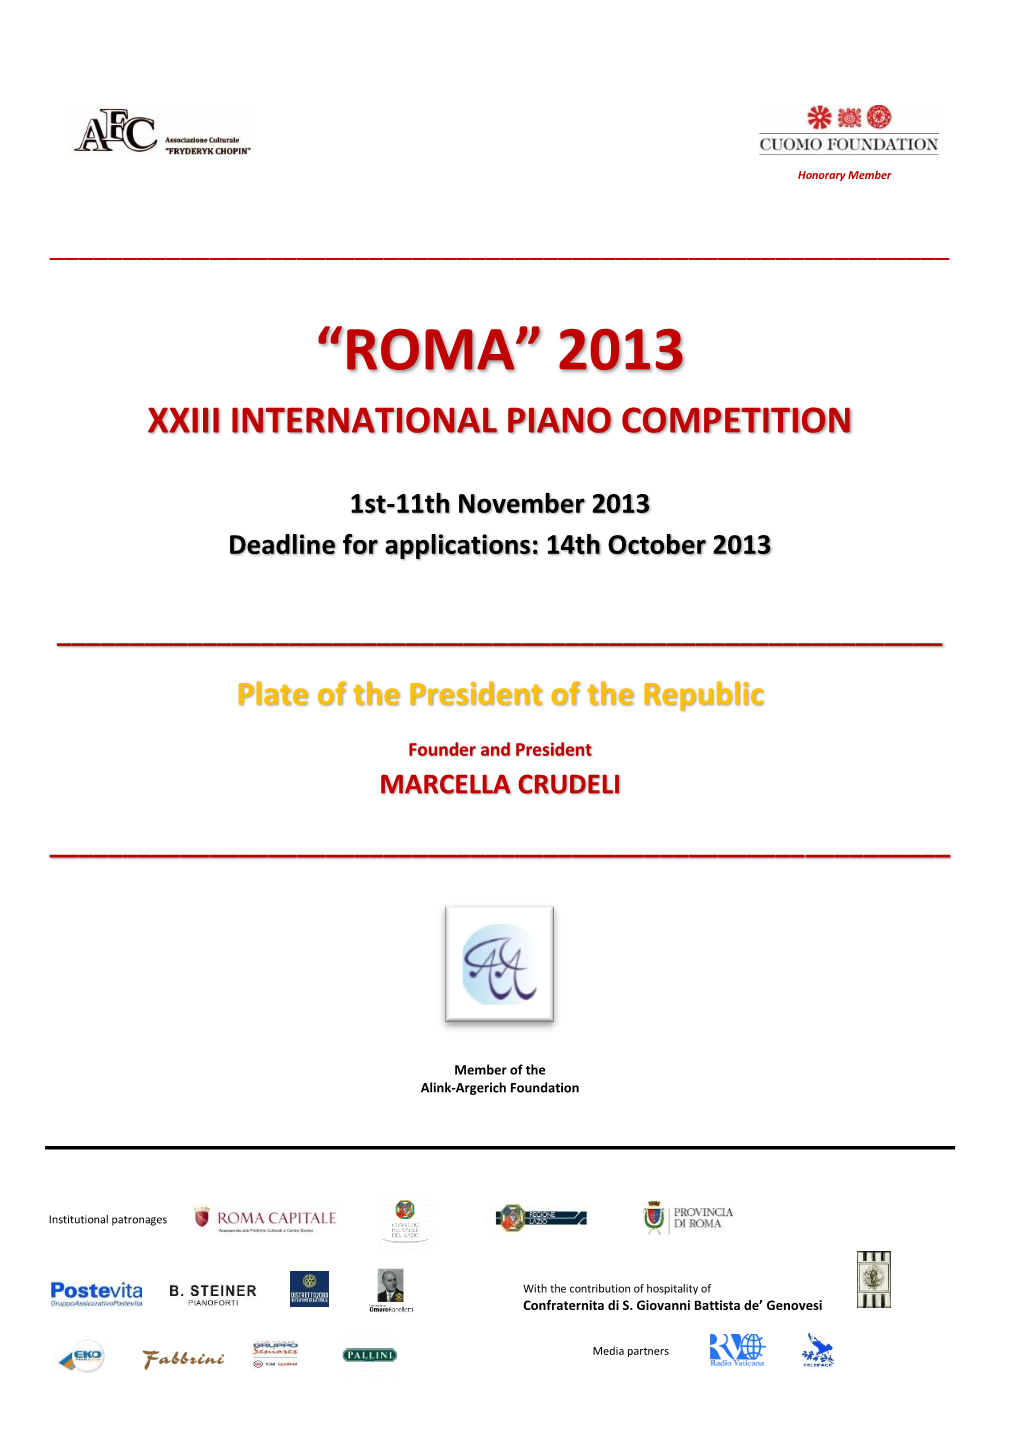 “Roma” 2013 Xxiii International Piano Competition